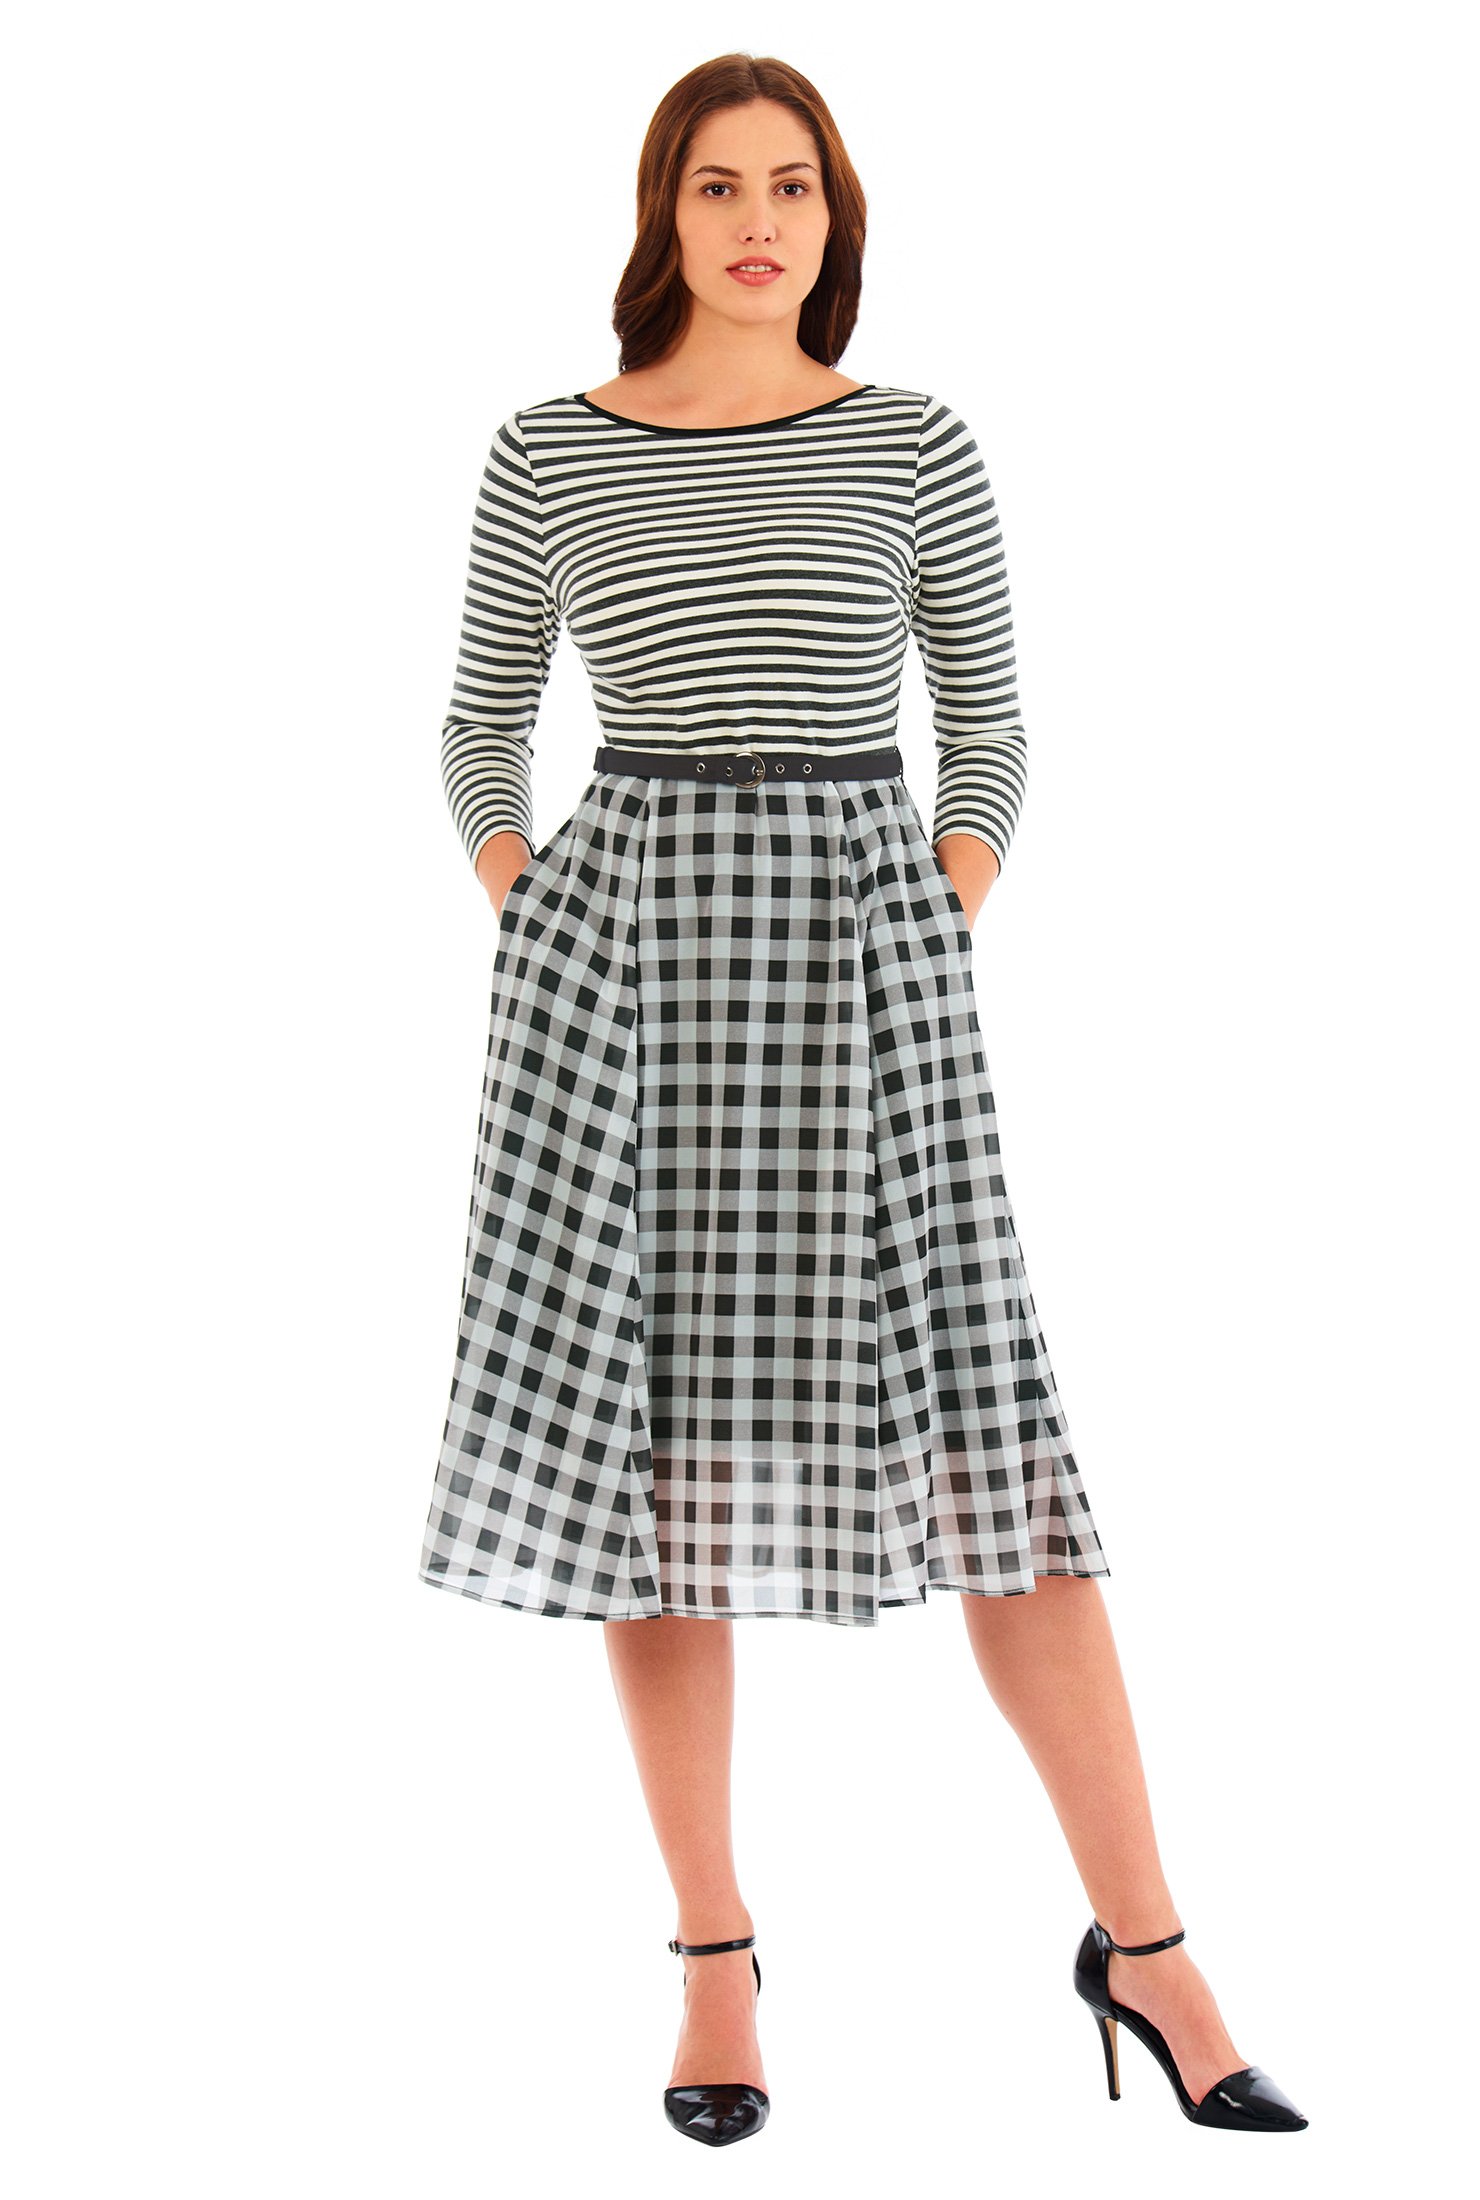 Shop Stripe knit and check print georgette belted dress | eShakti